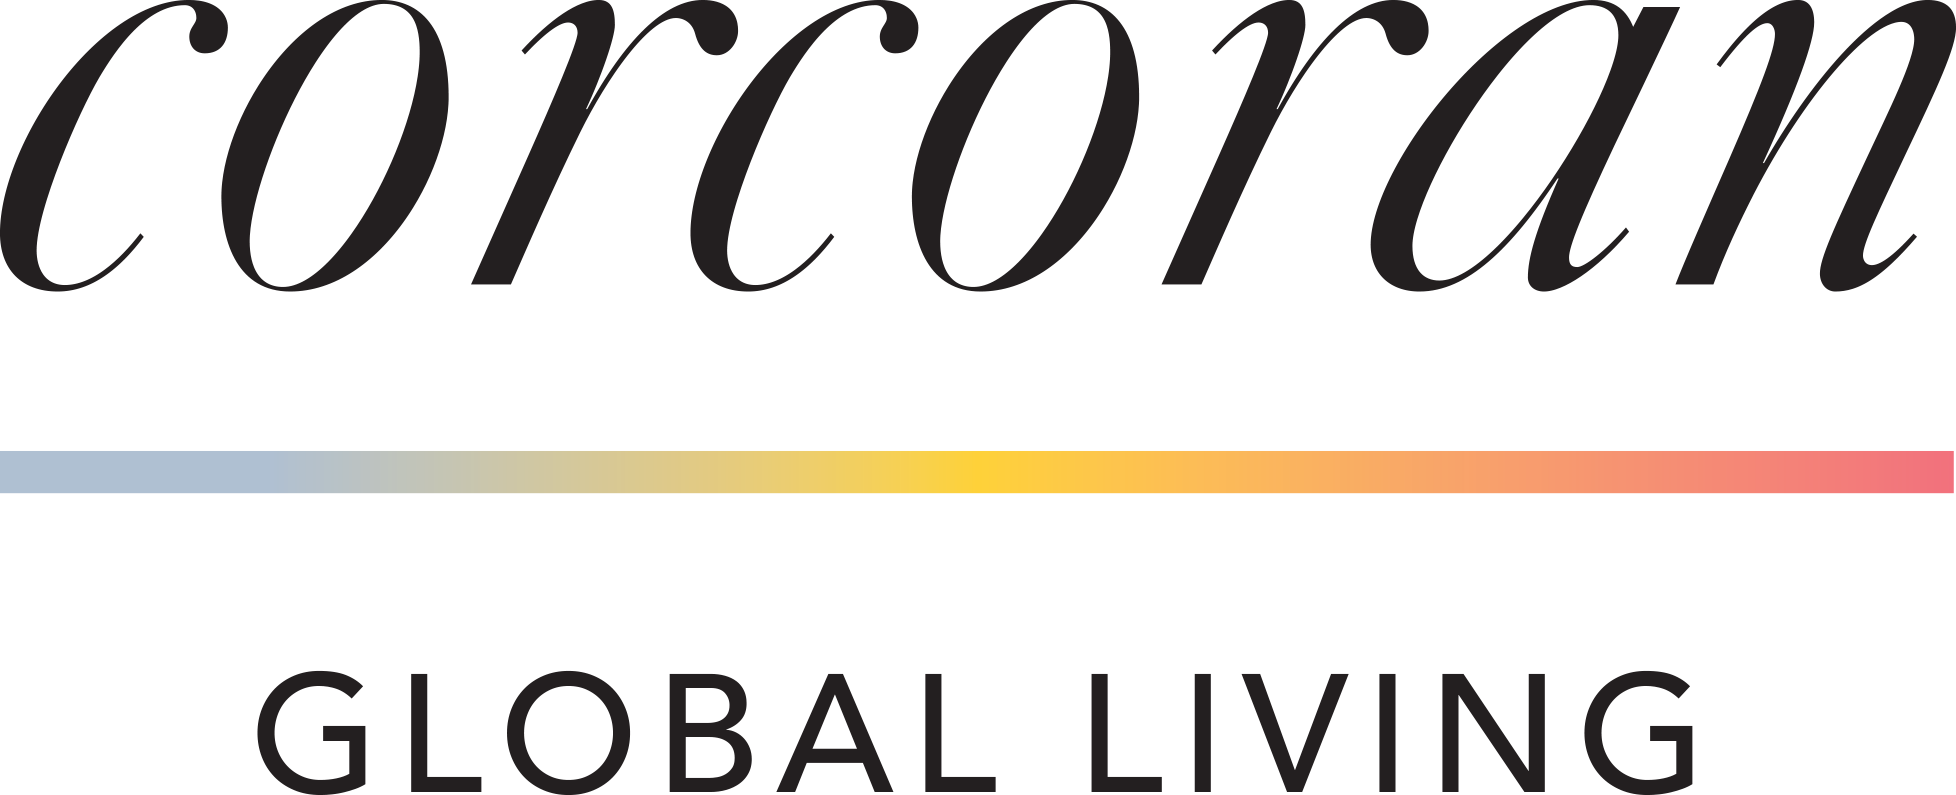 Logo_CorcoranGlobalLiving_ColorBar_Black.png